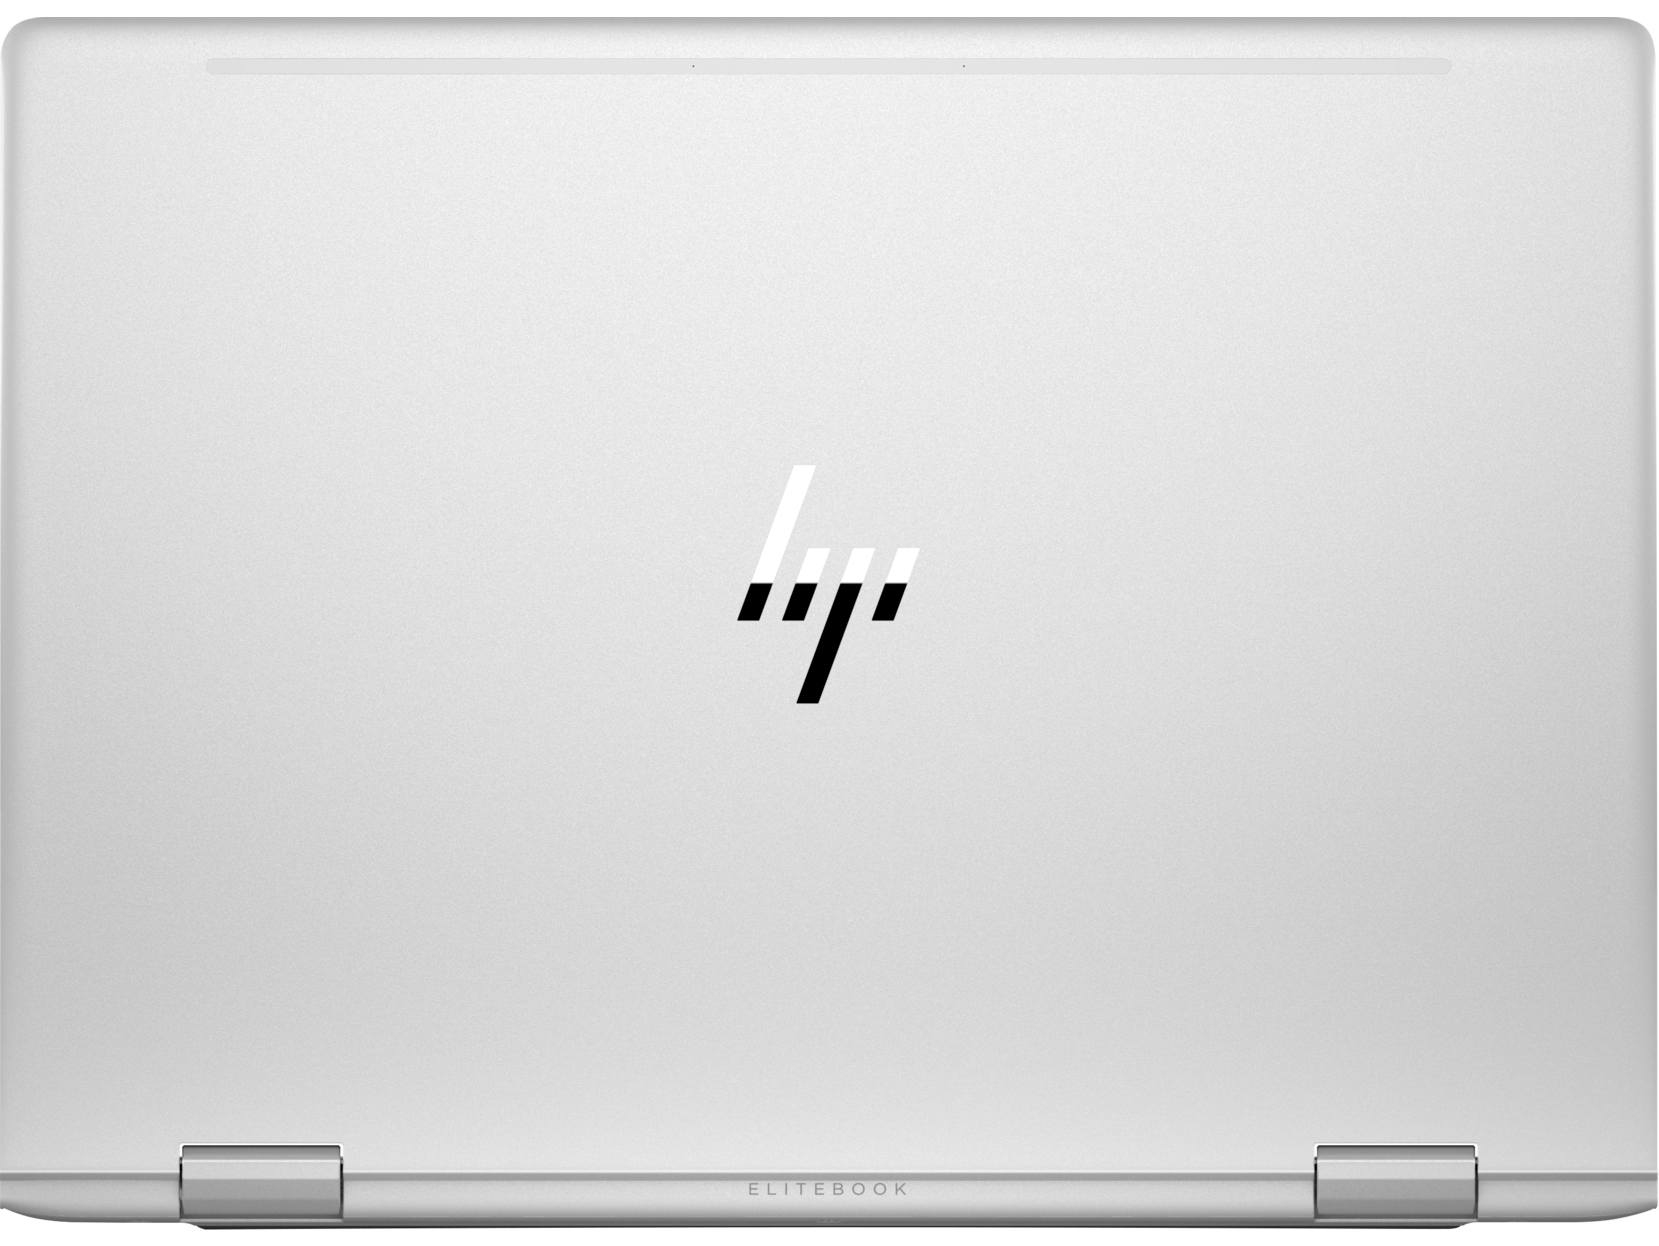 Ноутбук HP EliteBook x360 830 G6